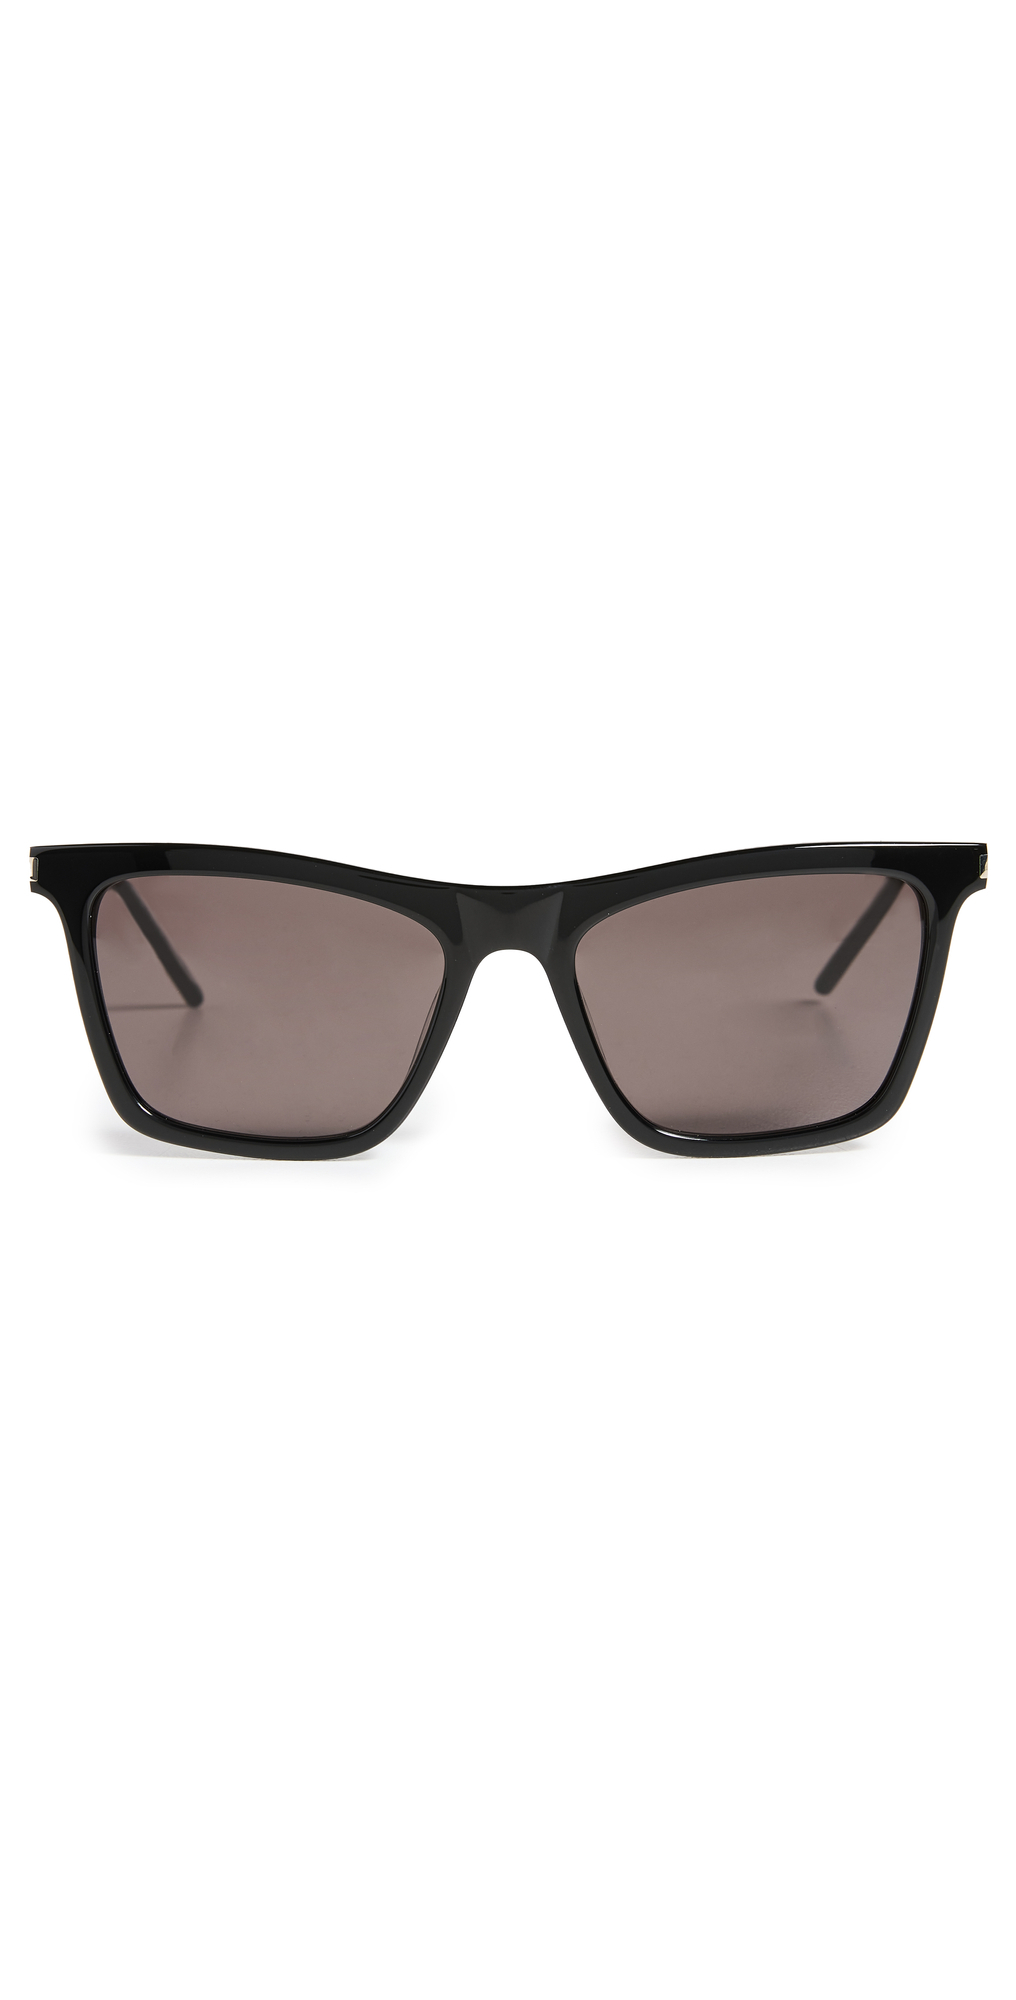 Saint Laurent Classic Combination Corner Angle Rectangular Sunglasses in black / silver